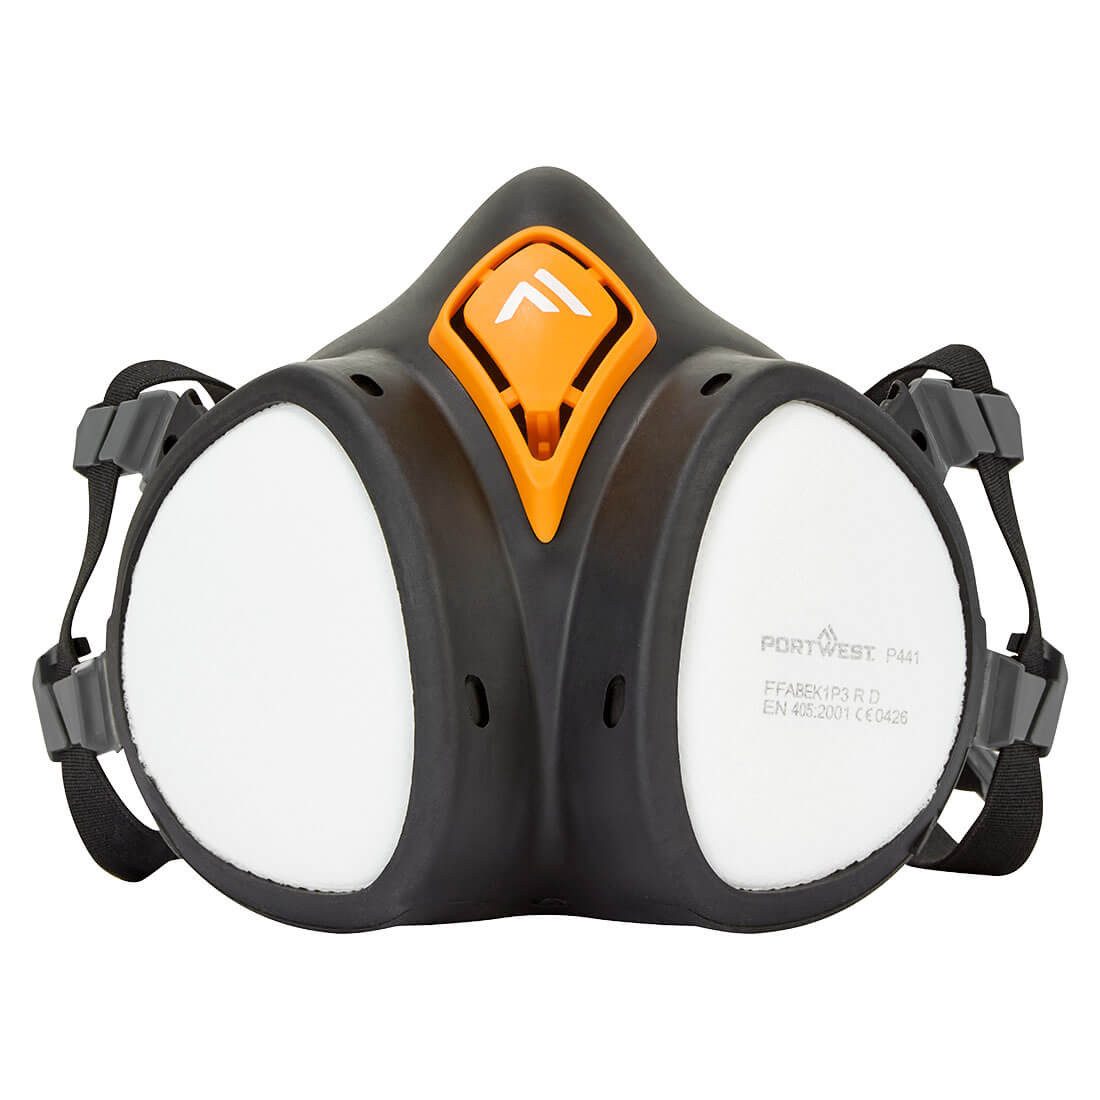 Semi-Masca cu filtru integrat ABEK1P3 - Echipamente de protectie personala